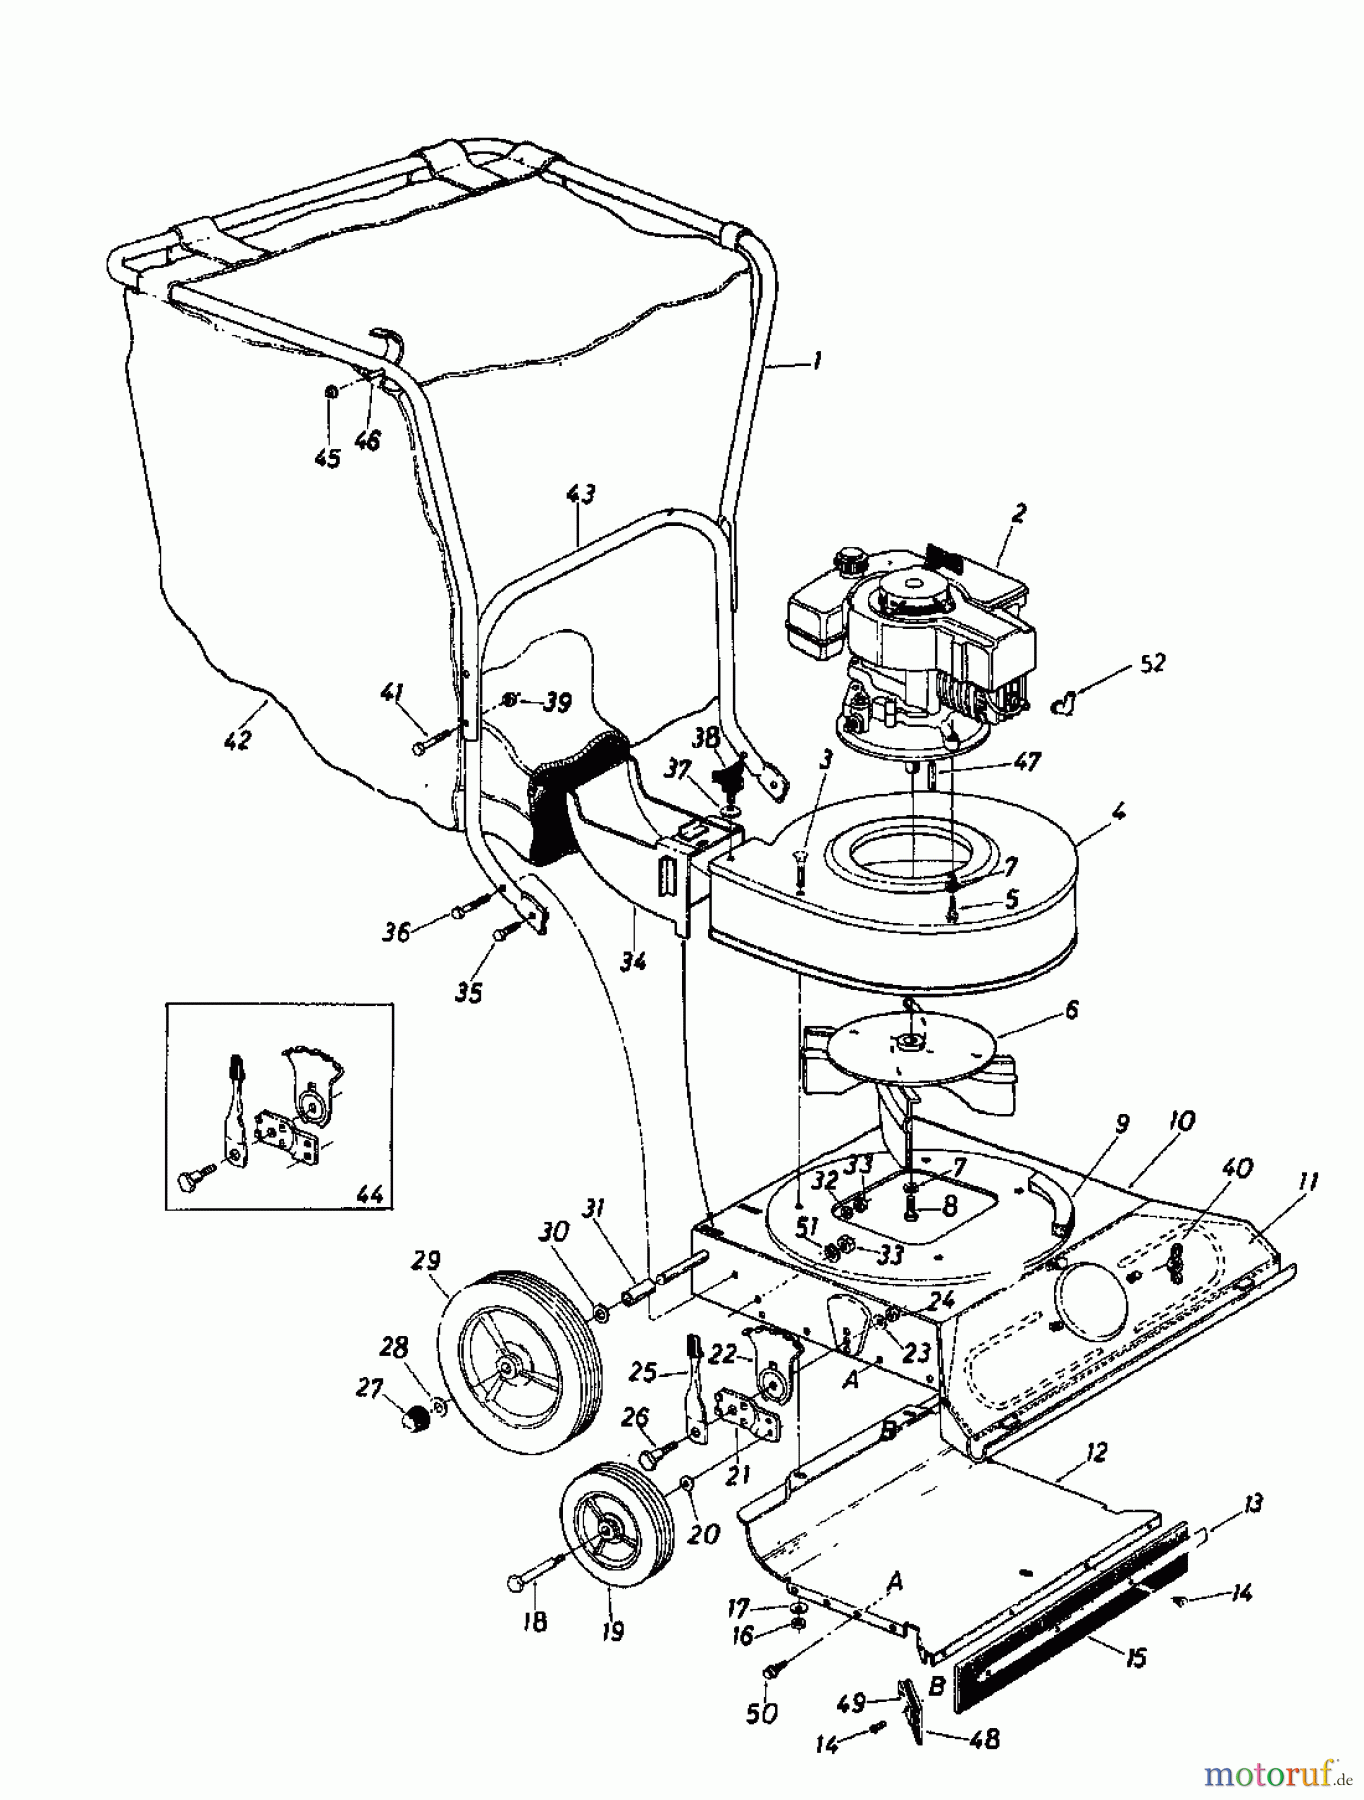  MTD Souffleur de feuille, Aspirateur de feuille Air-Vac 660 247-6600  (1987) Machine de base